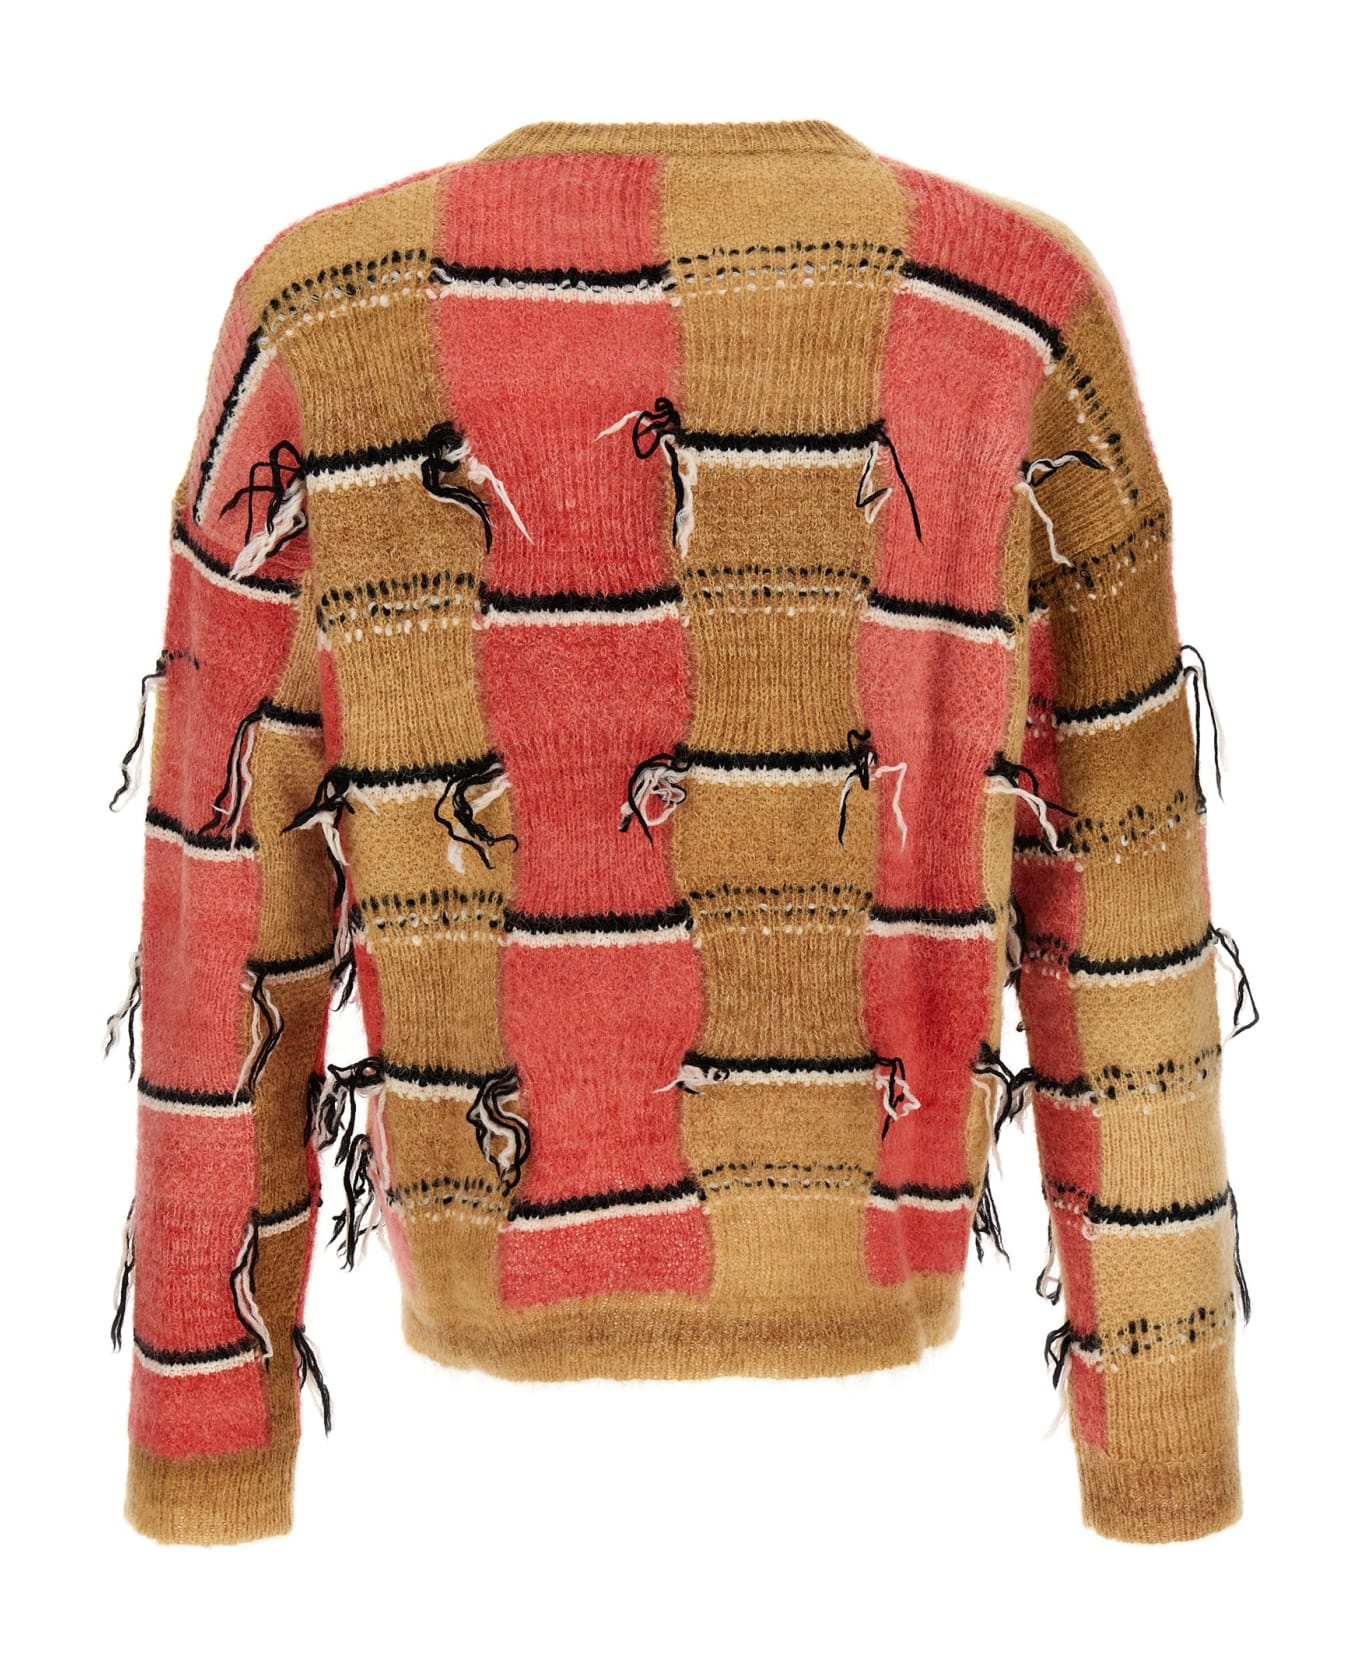 Marni Fringed Multicolor Sweater - Caramel